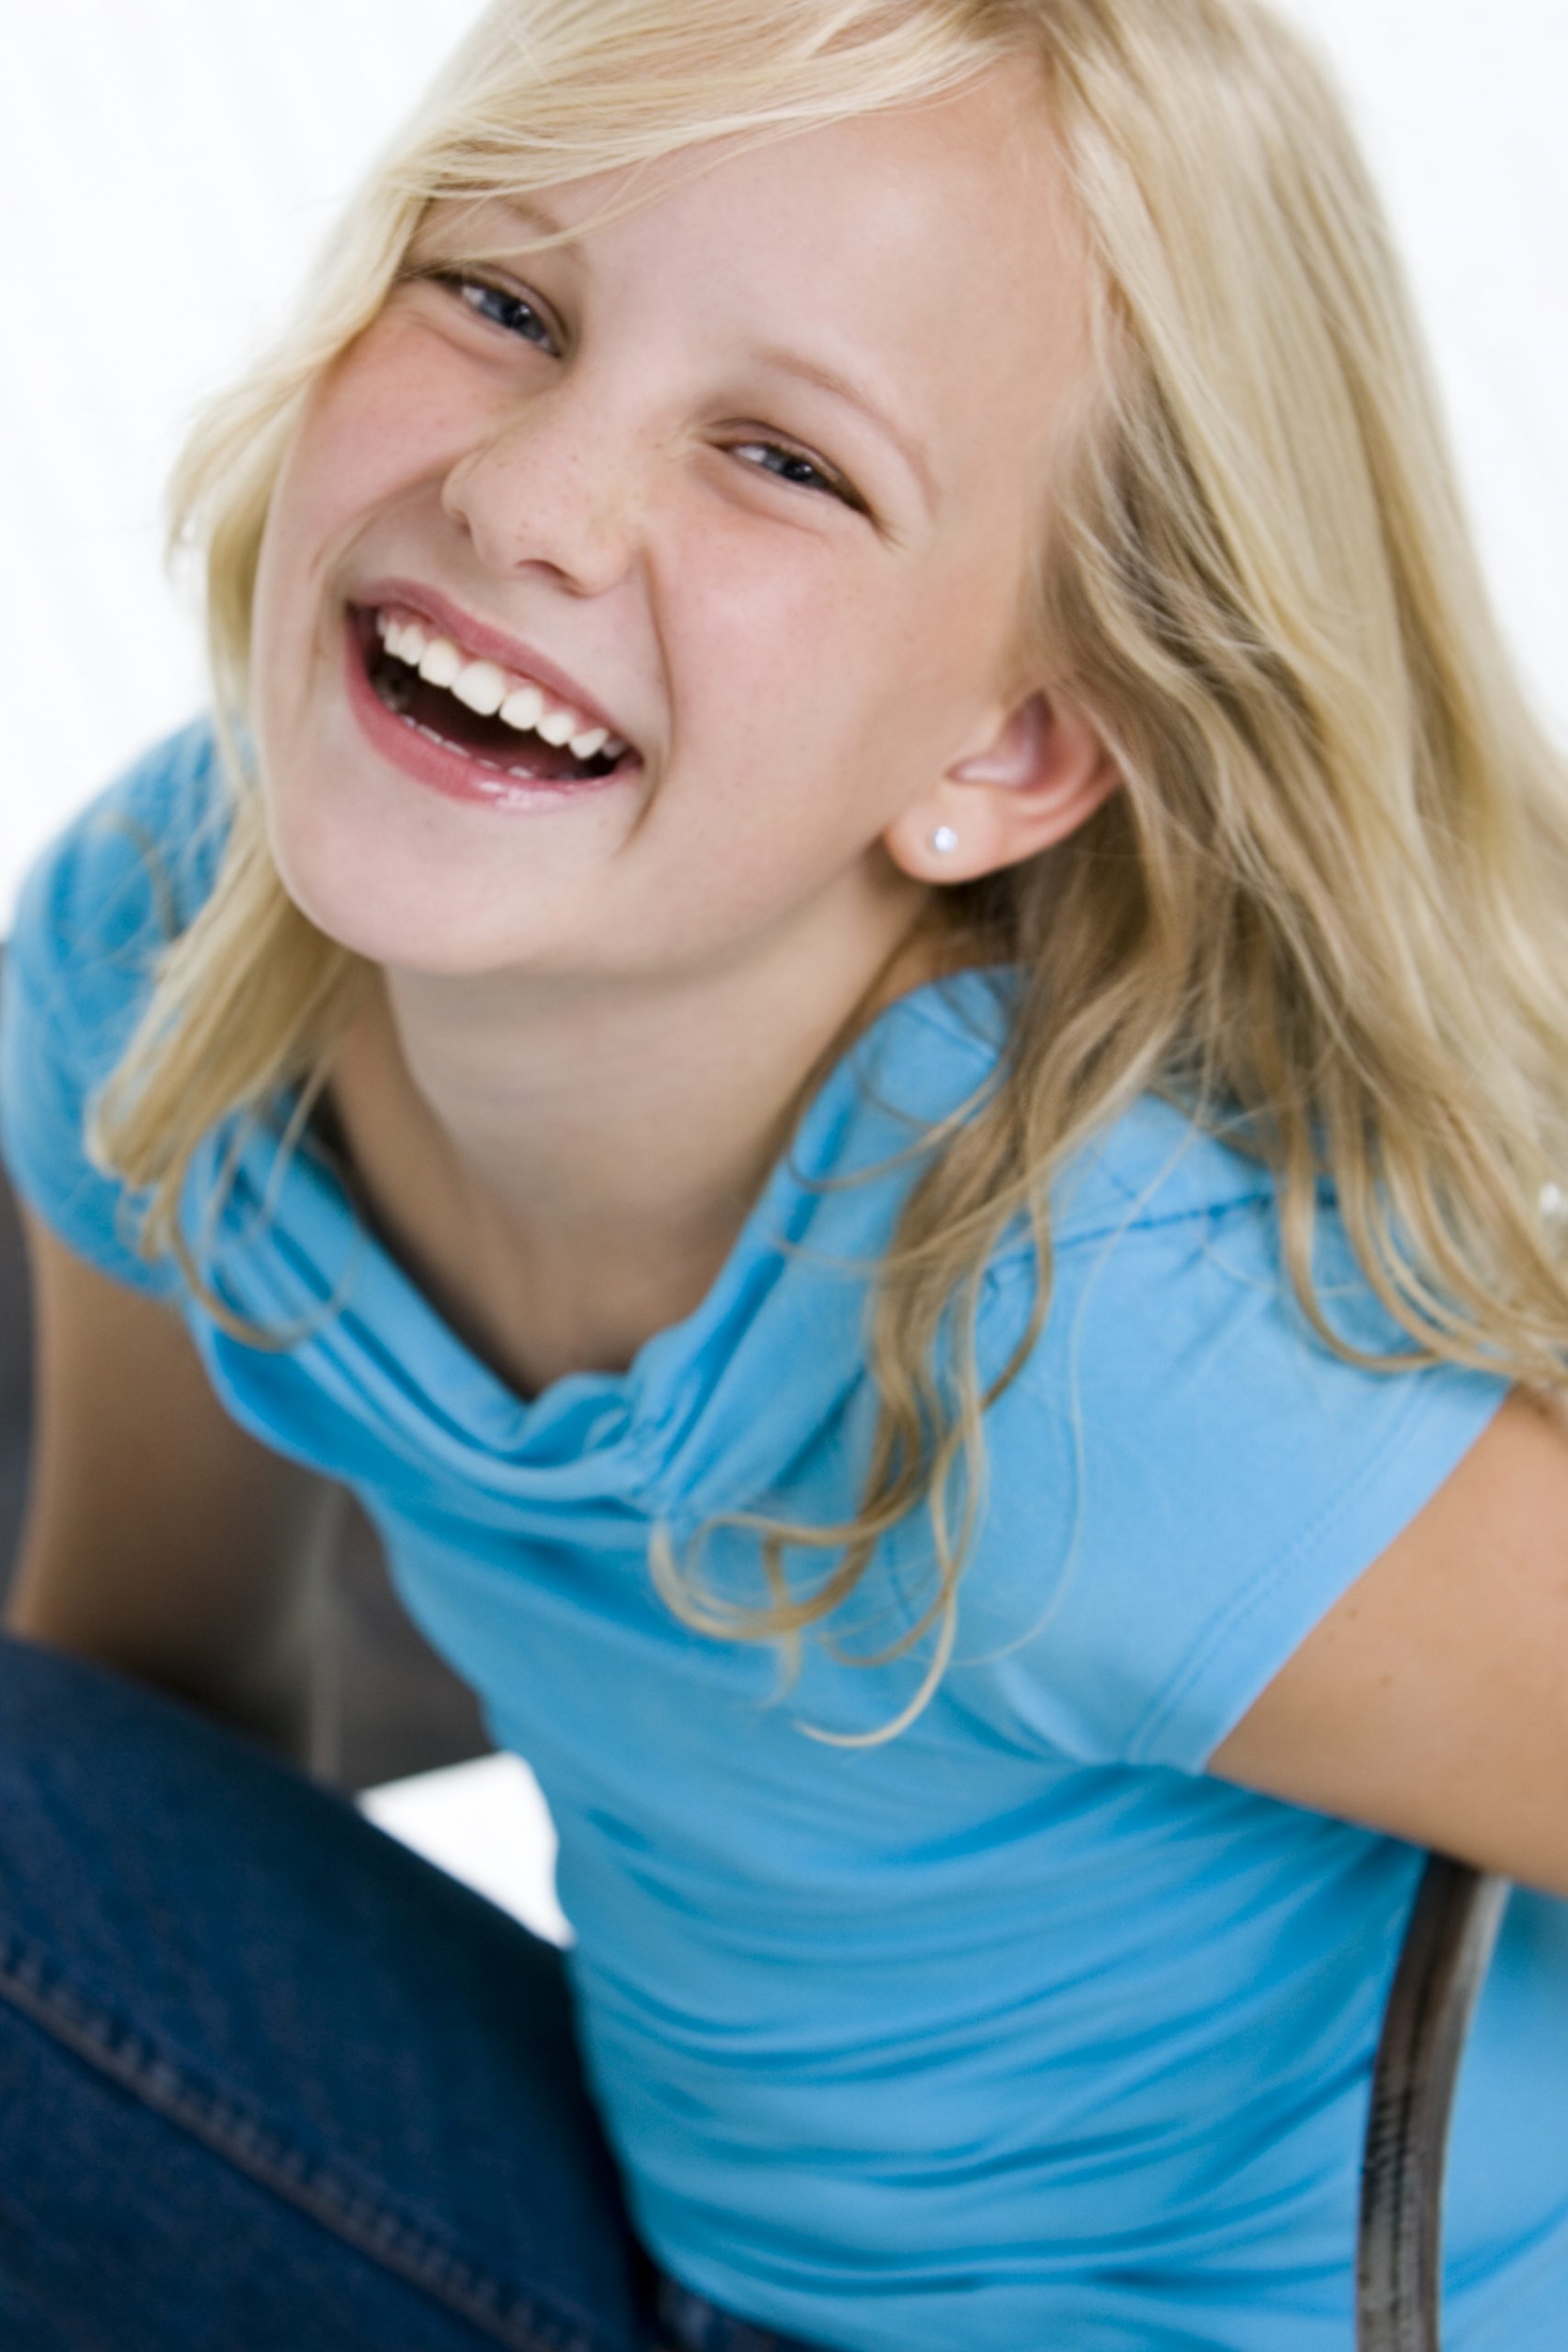 Chloe Greenfield Blonde Child Actor Headshot Laughing Blue Shirt